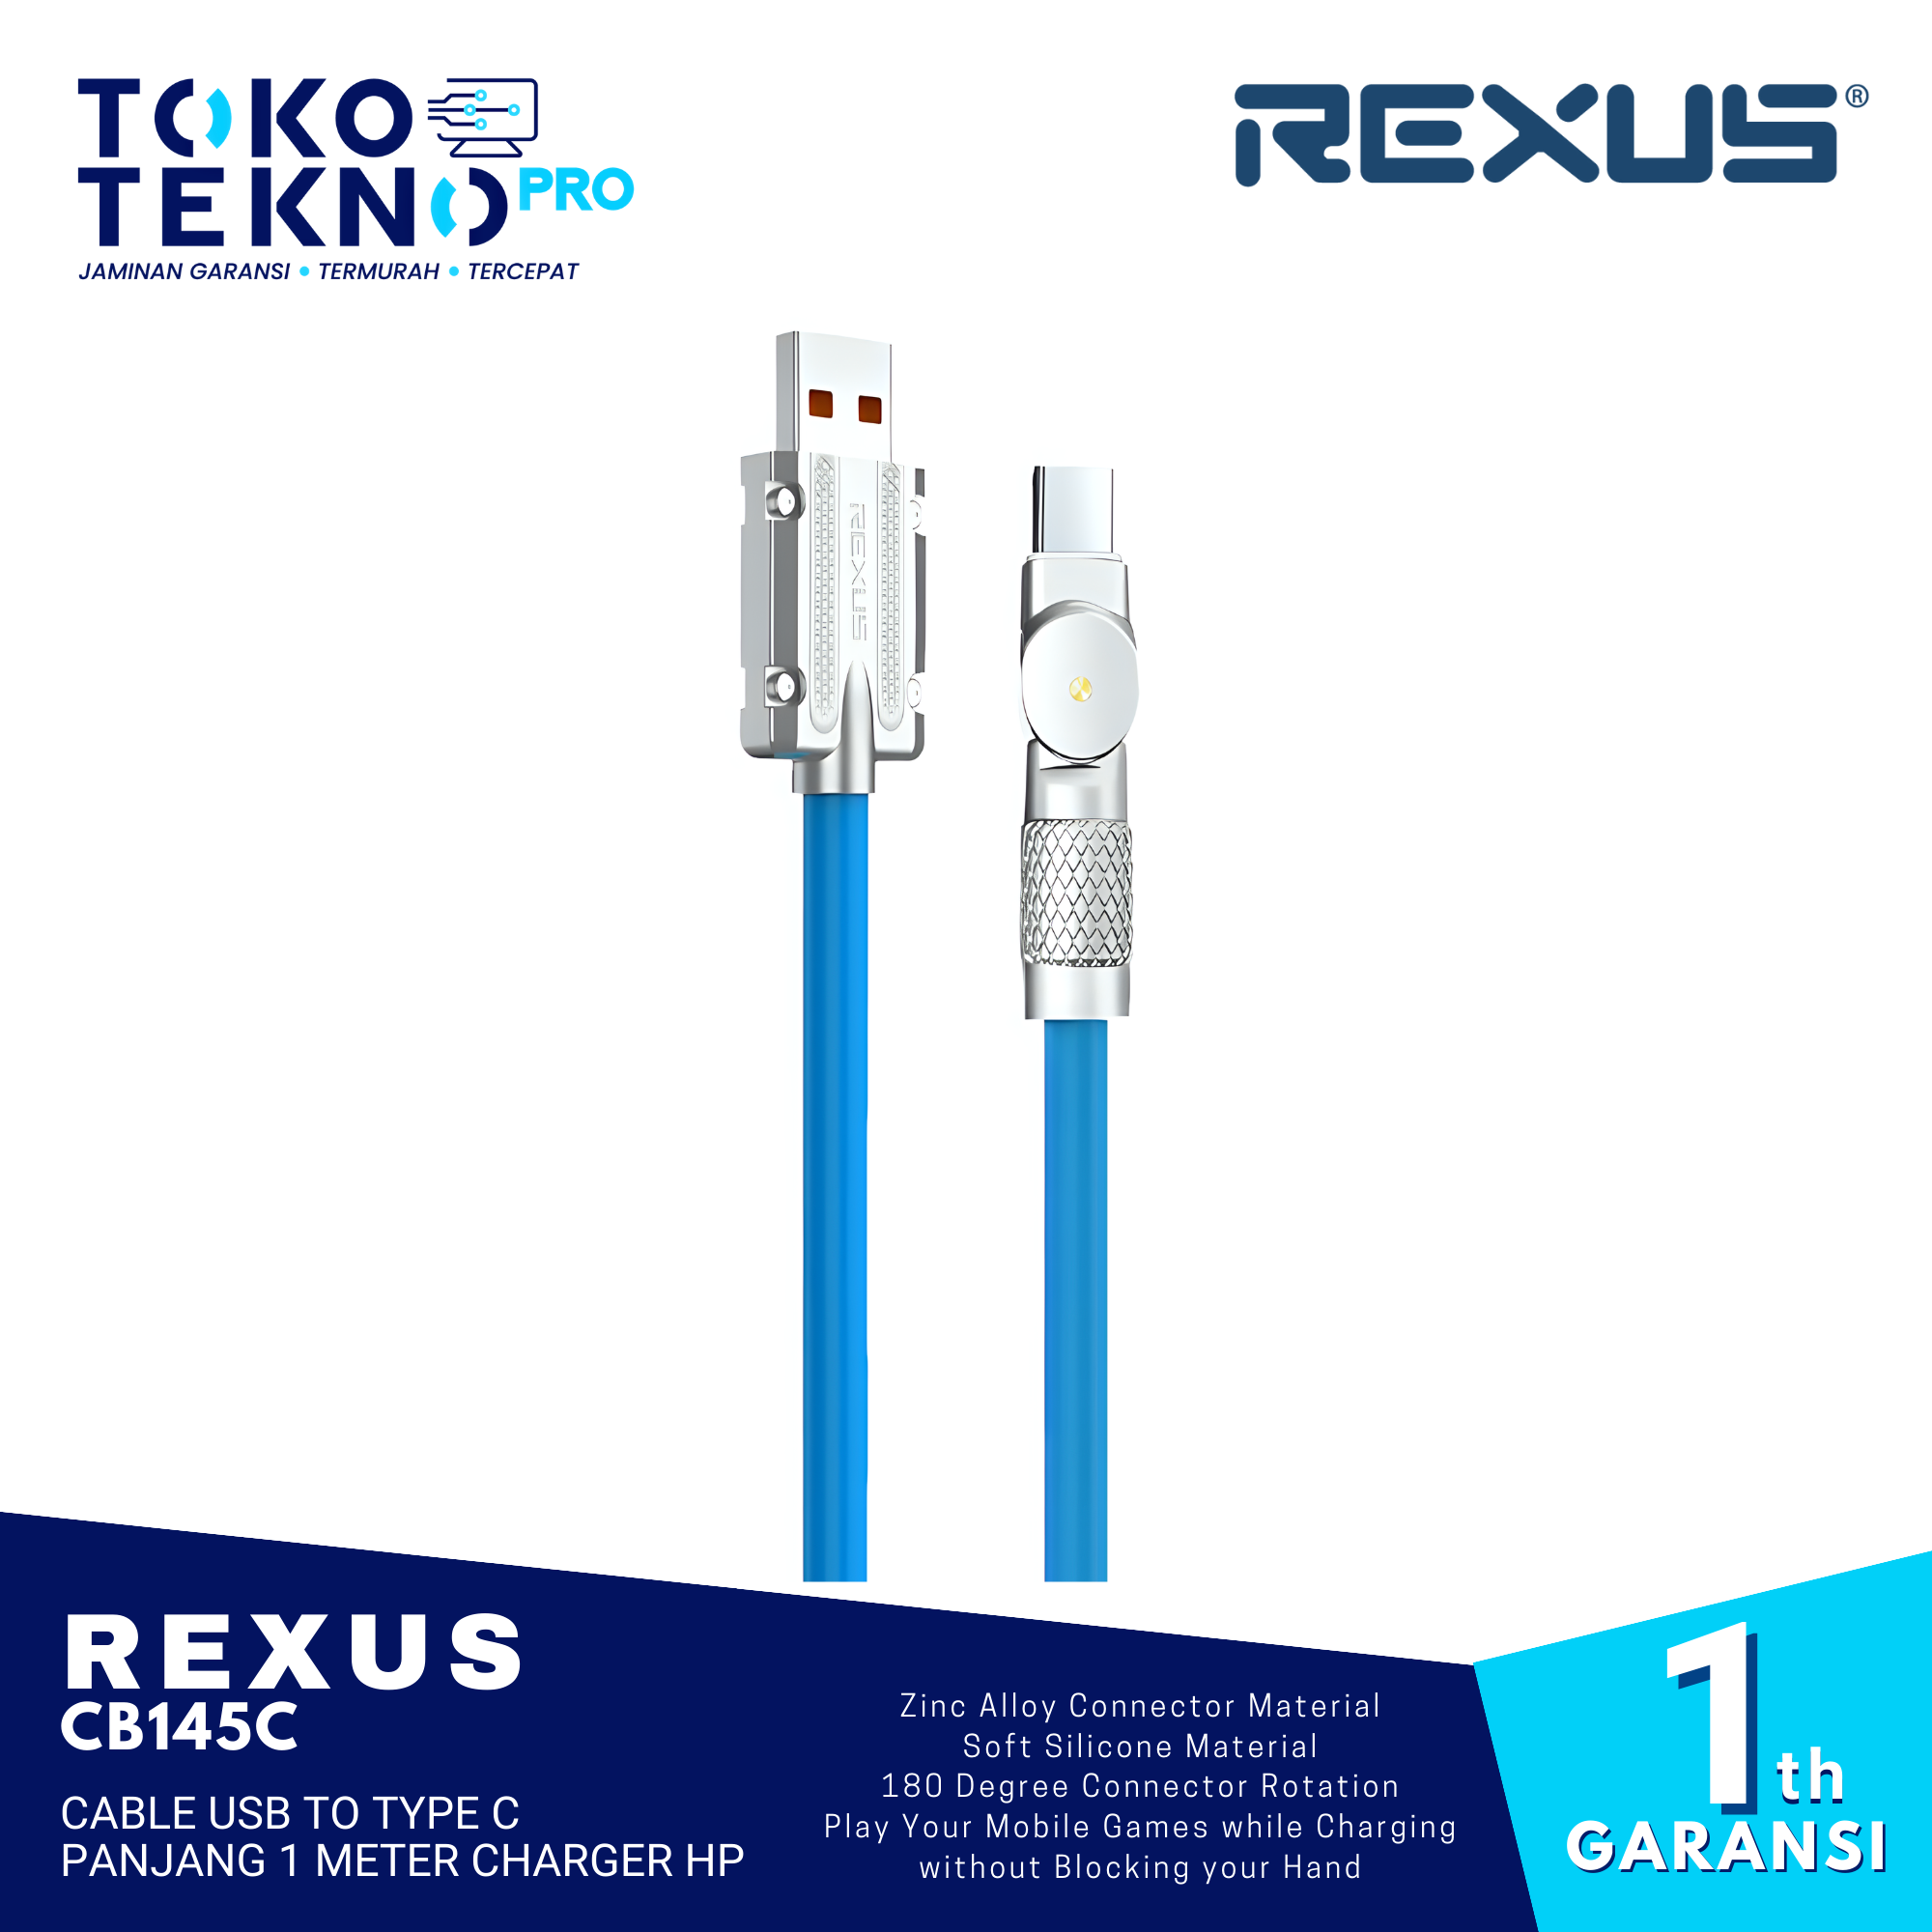 Rexus CB145C Cable USB To Type C Panjang 1 Meter Charger HP